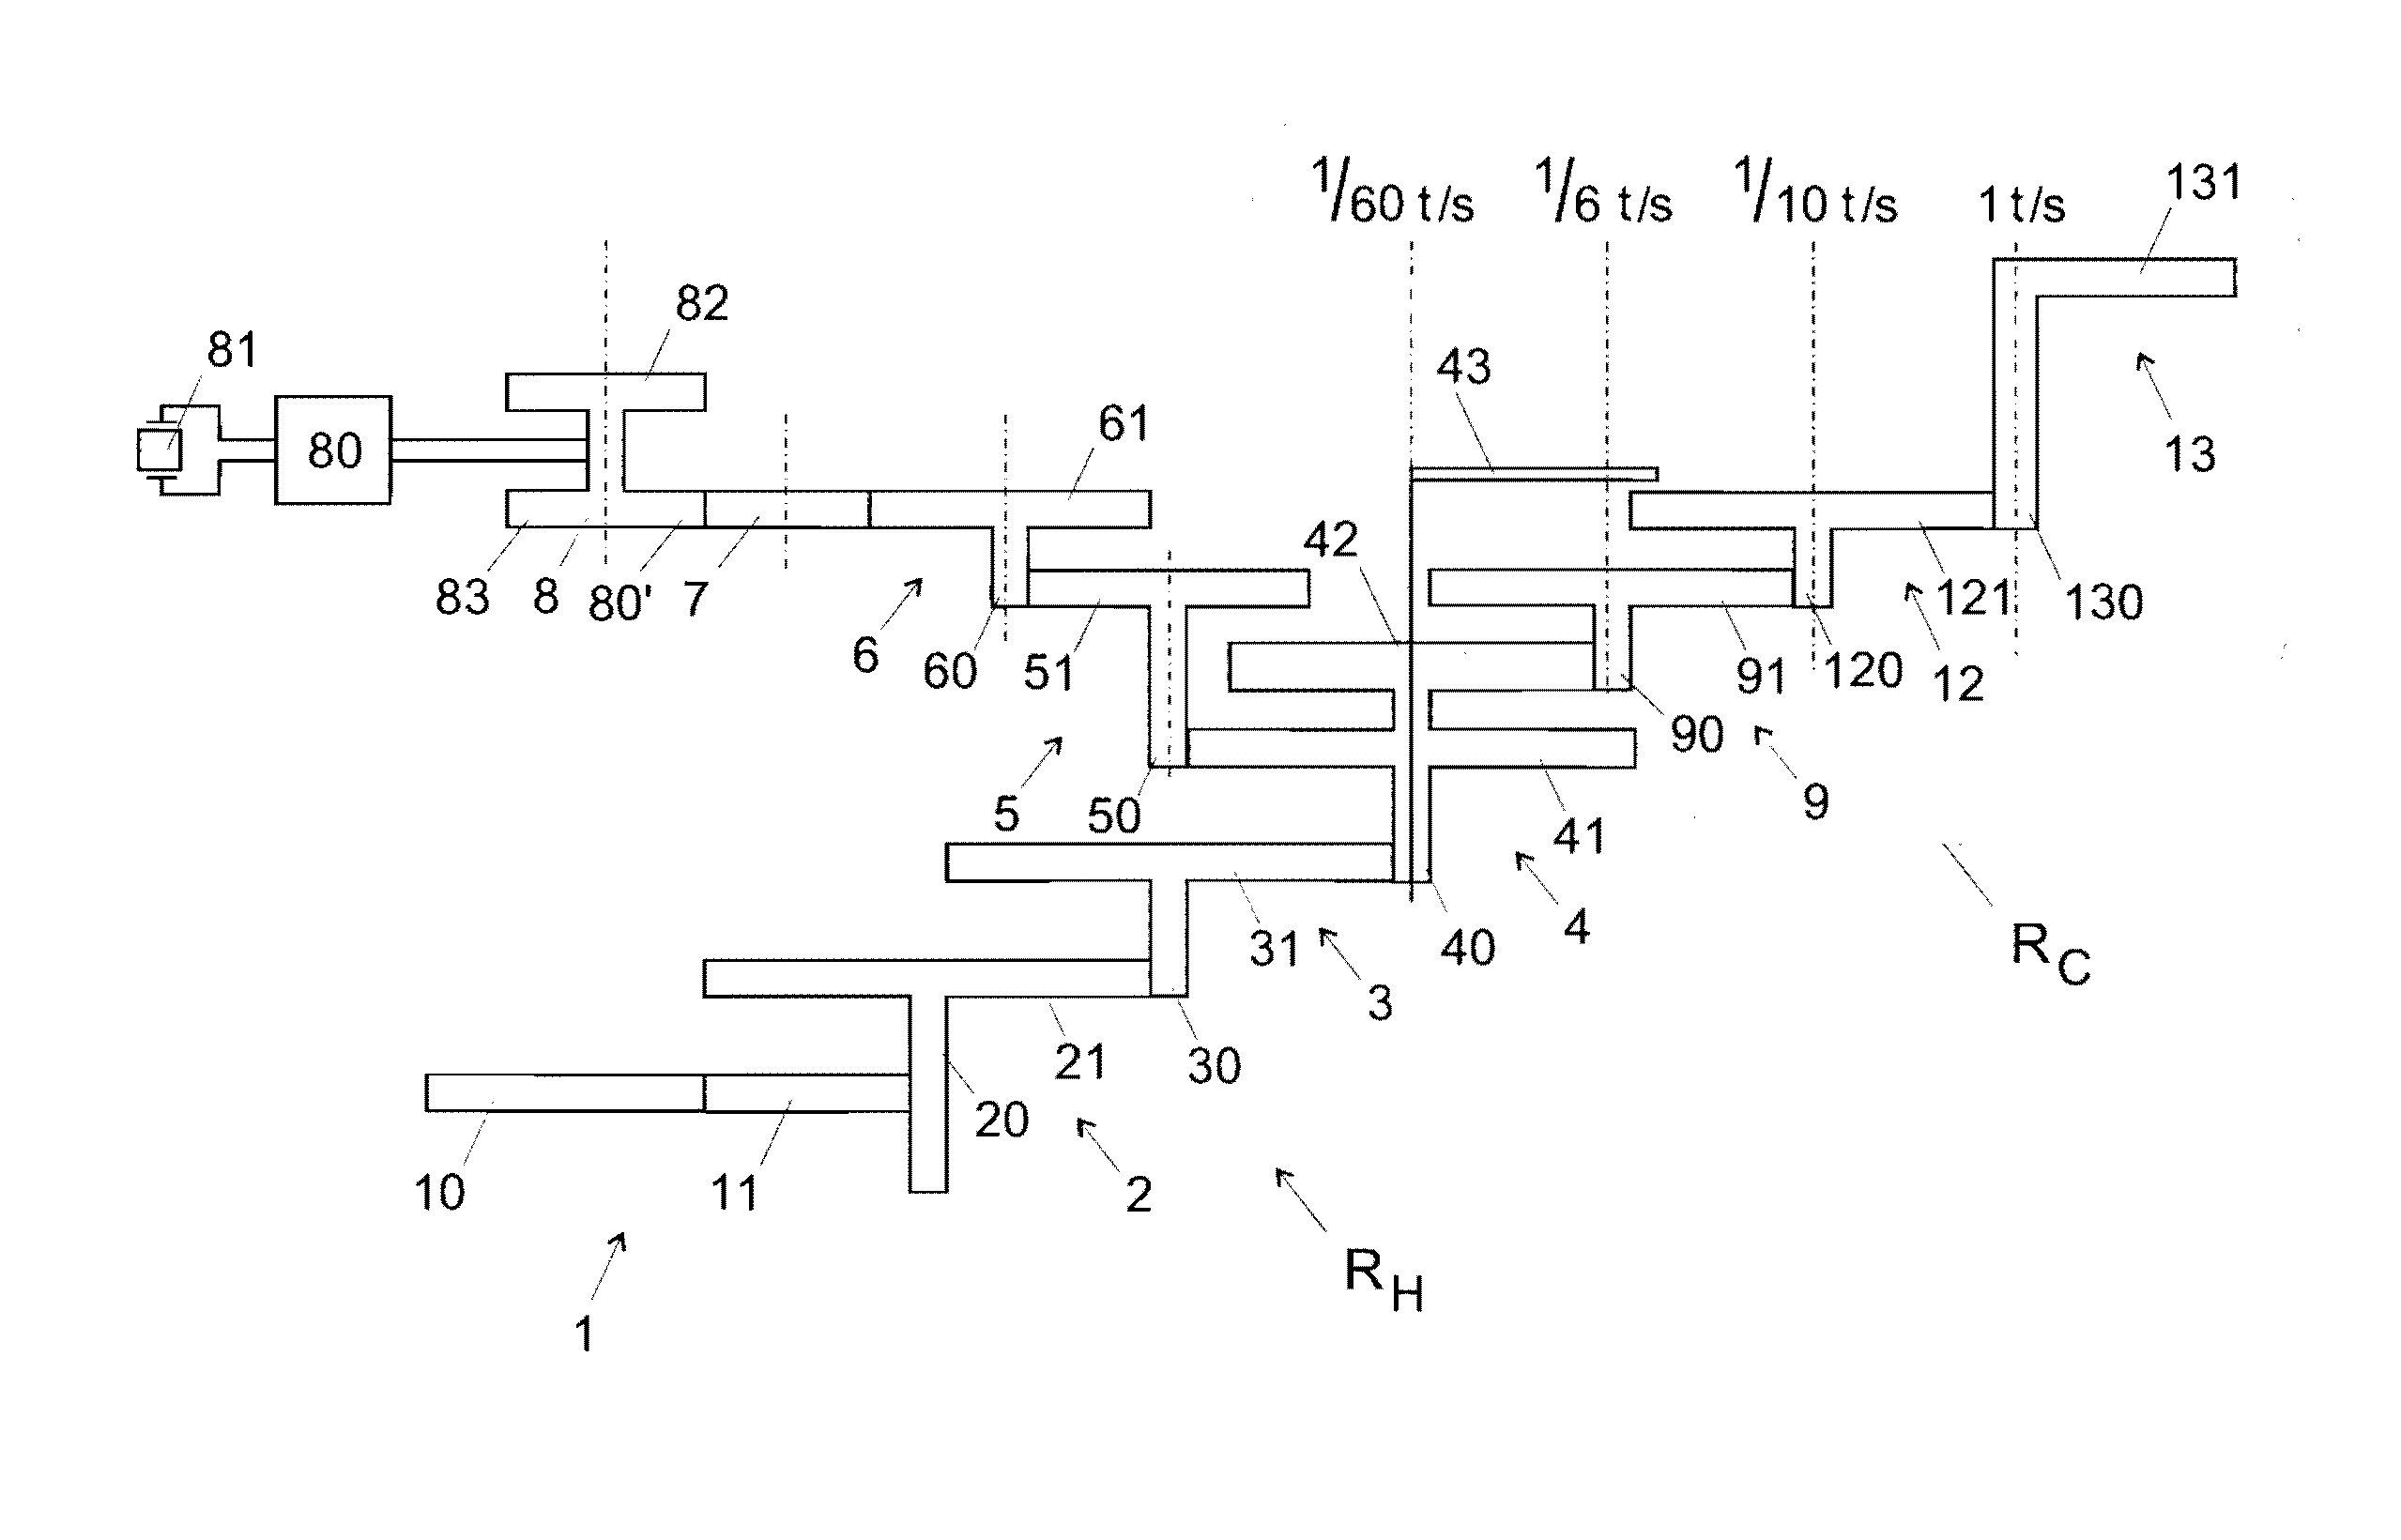 Movement for mechanical chronograph with quartz regulator